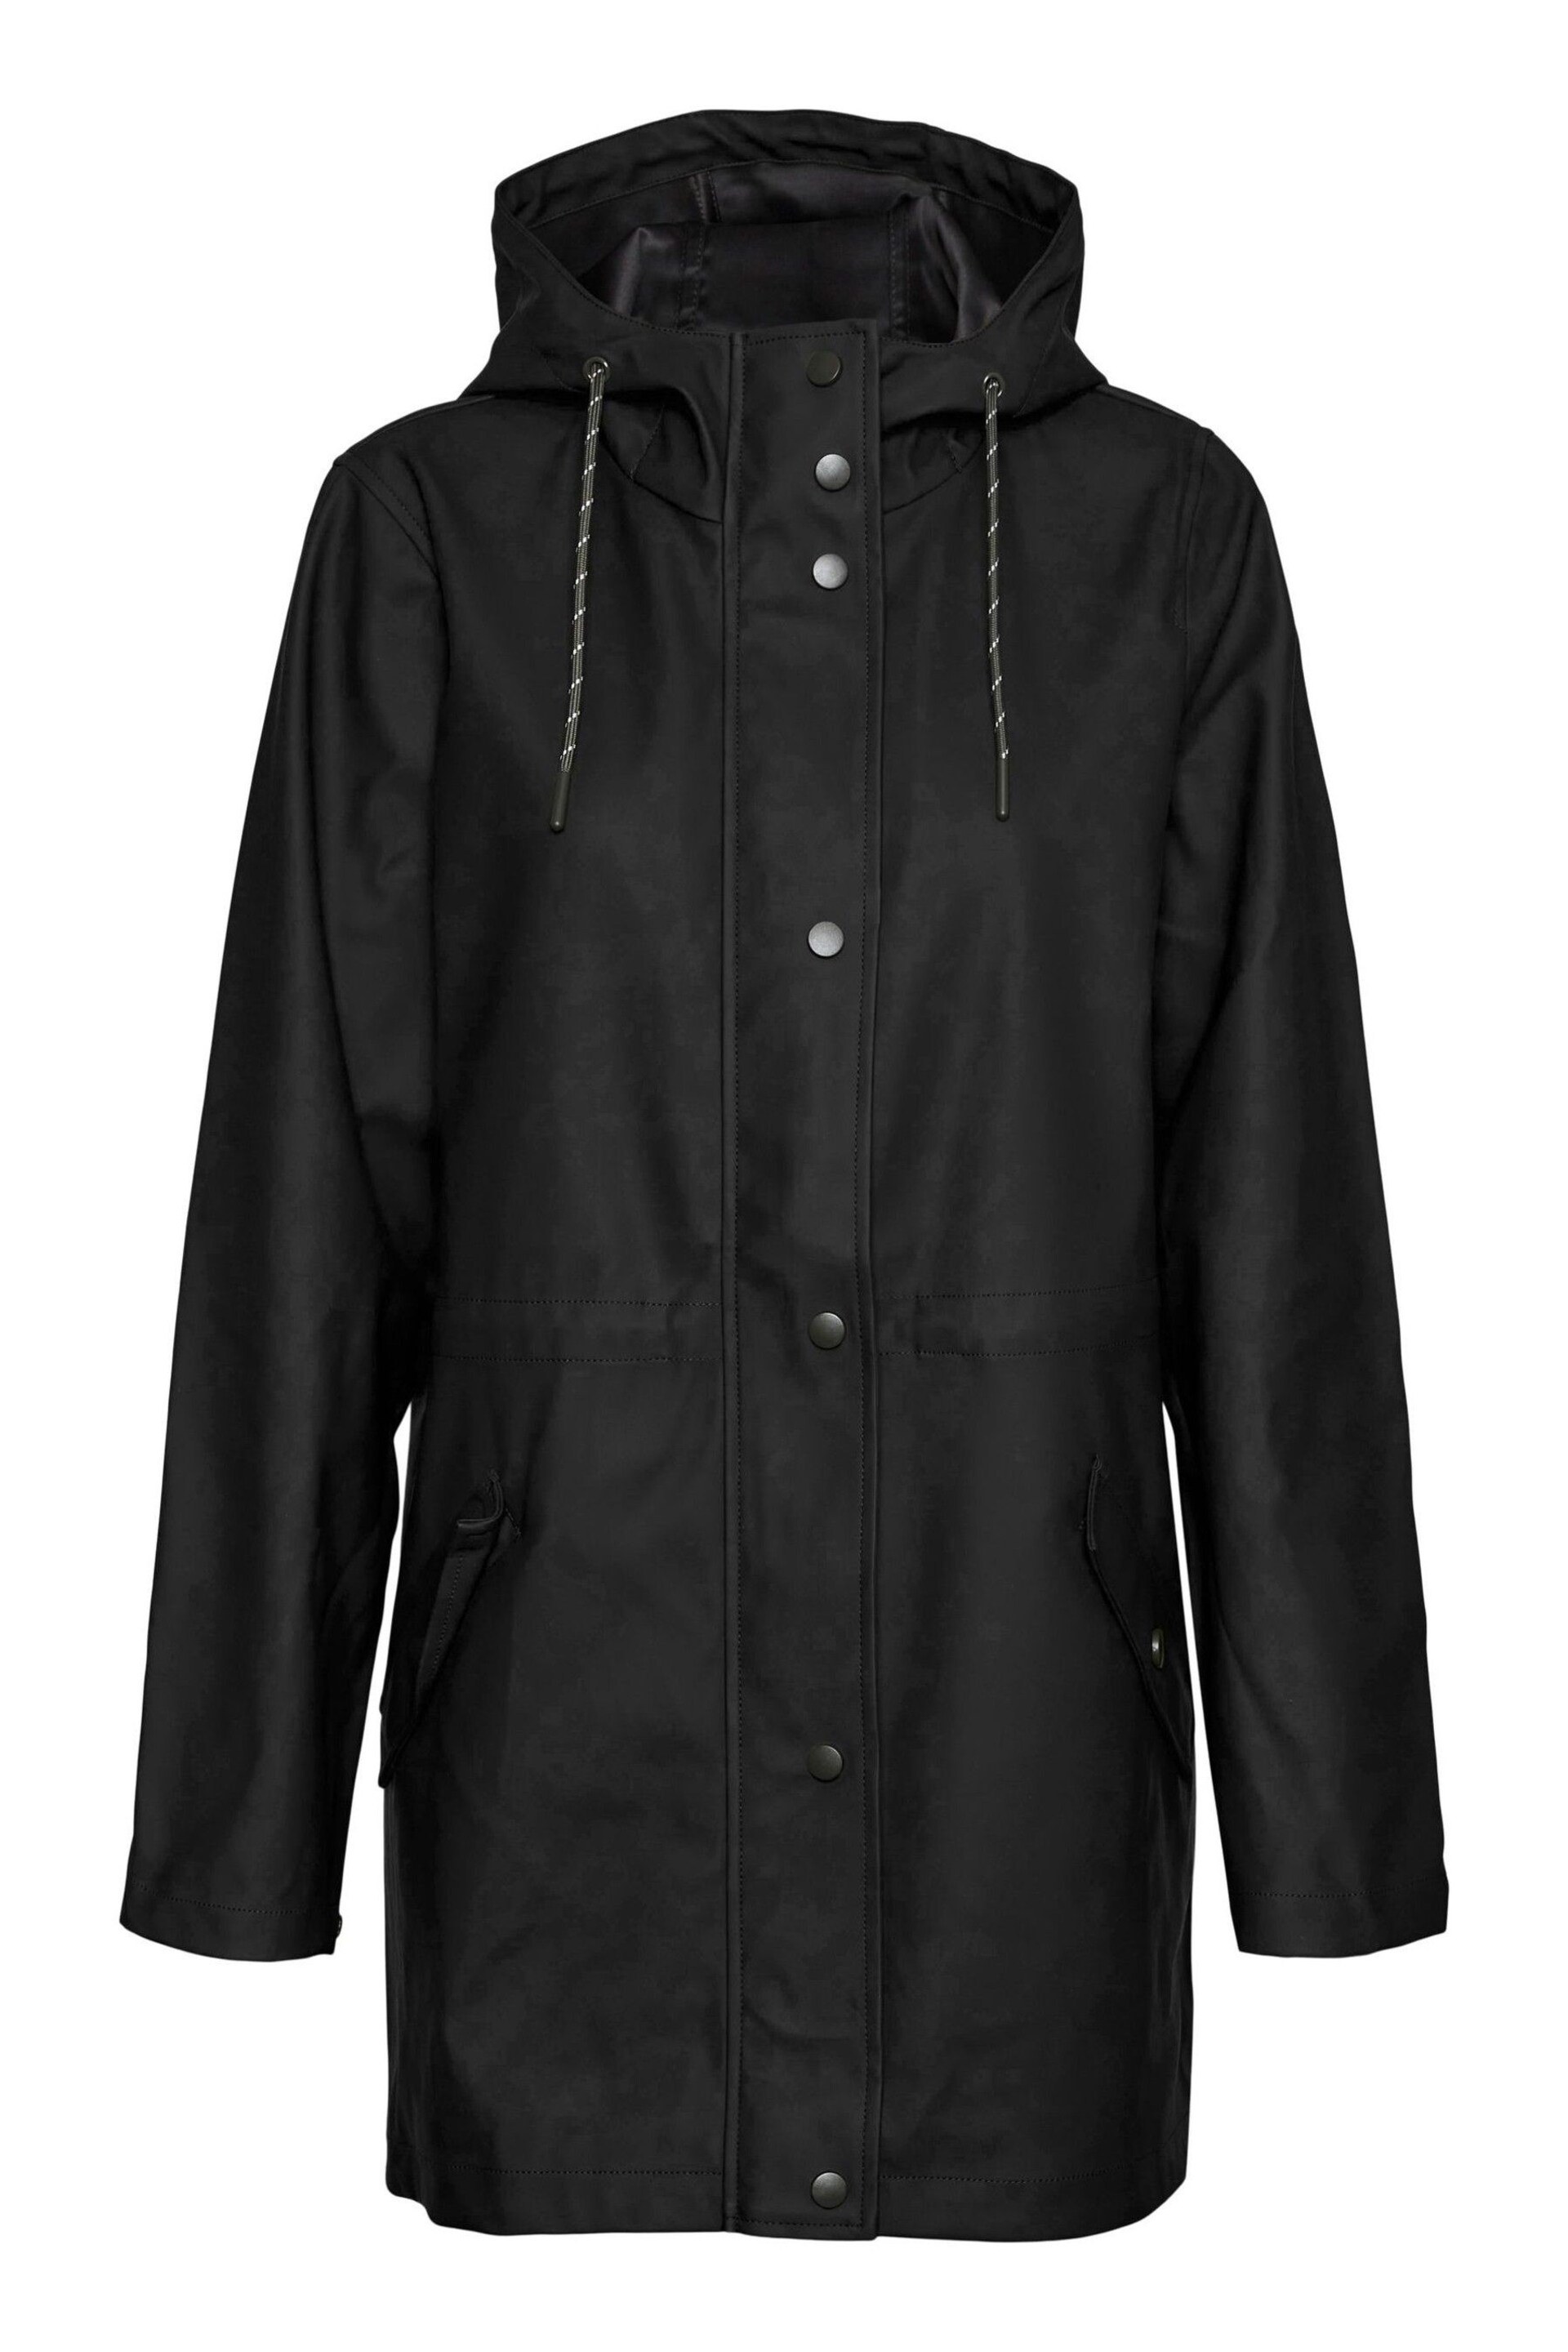 VERO MODA Black Hooded Rain Jacket - Image 5 of 5